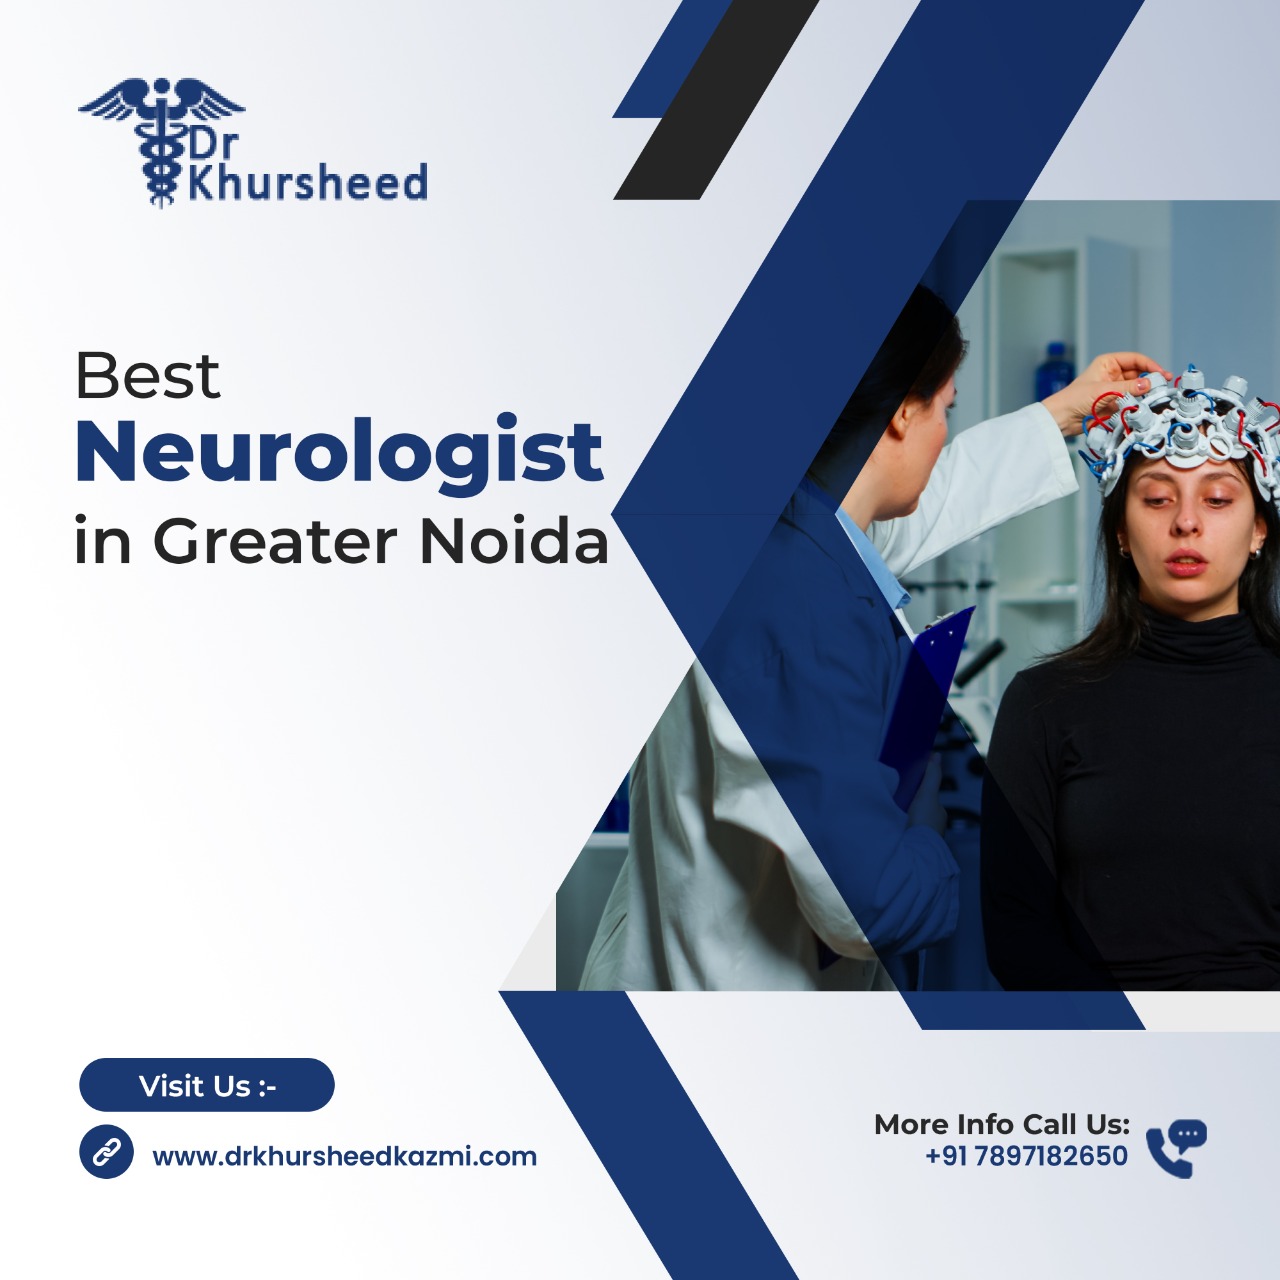 Contact Best neurologist in Greater Noida - Classified Ads Shop